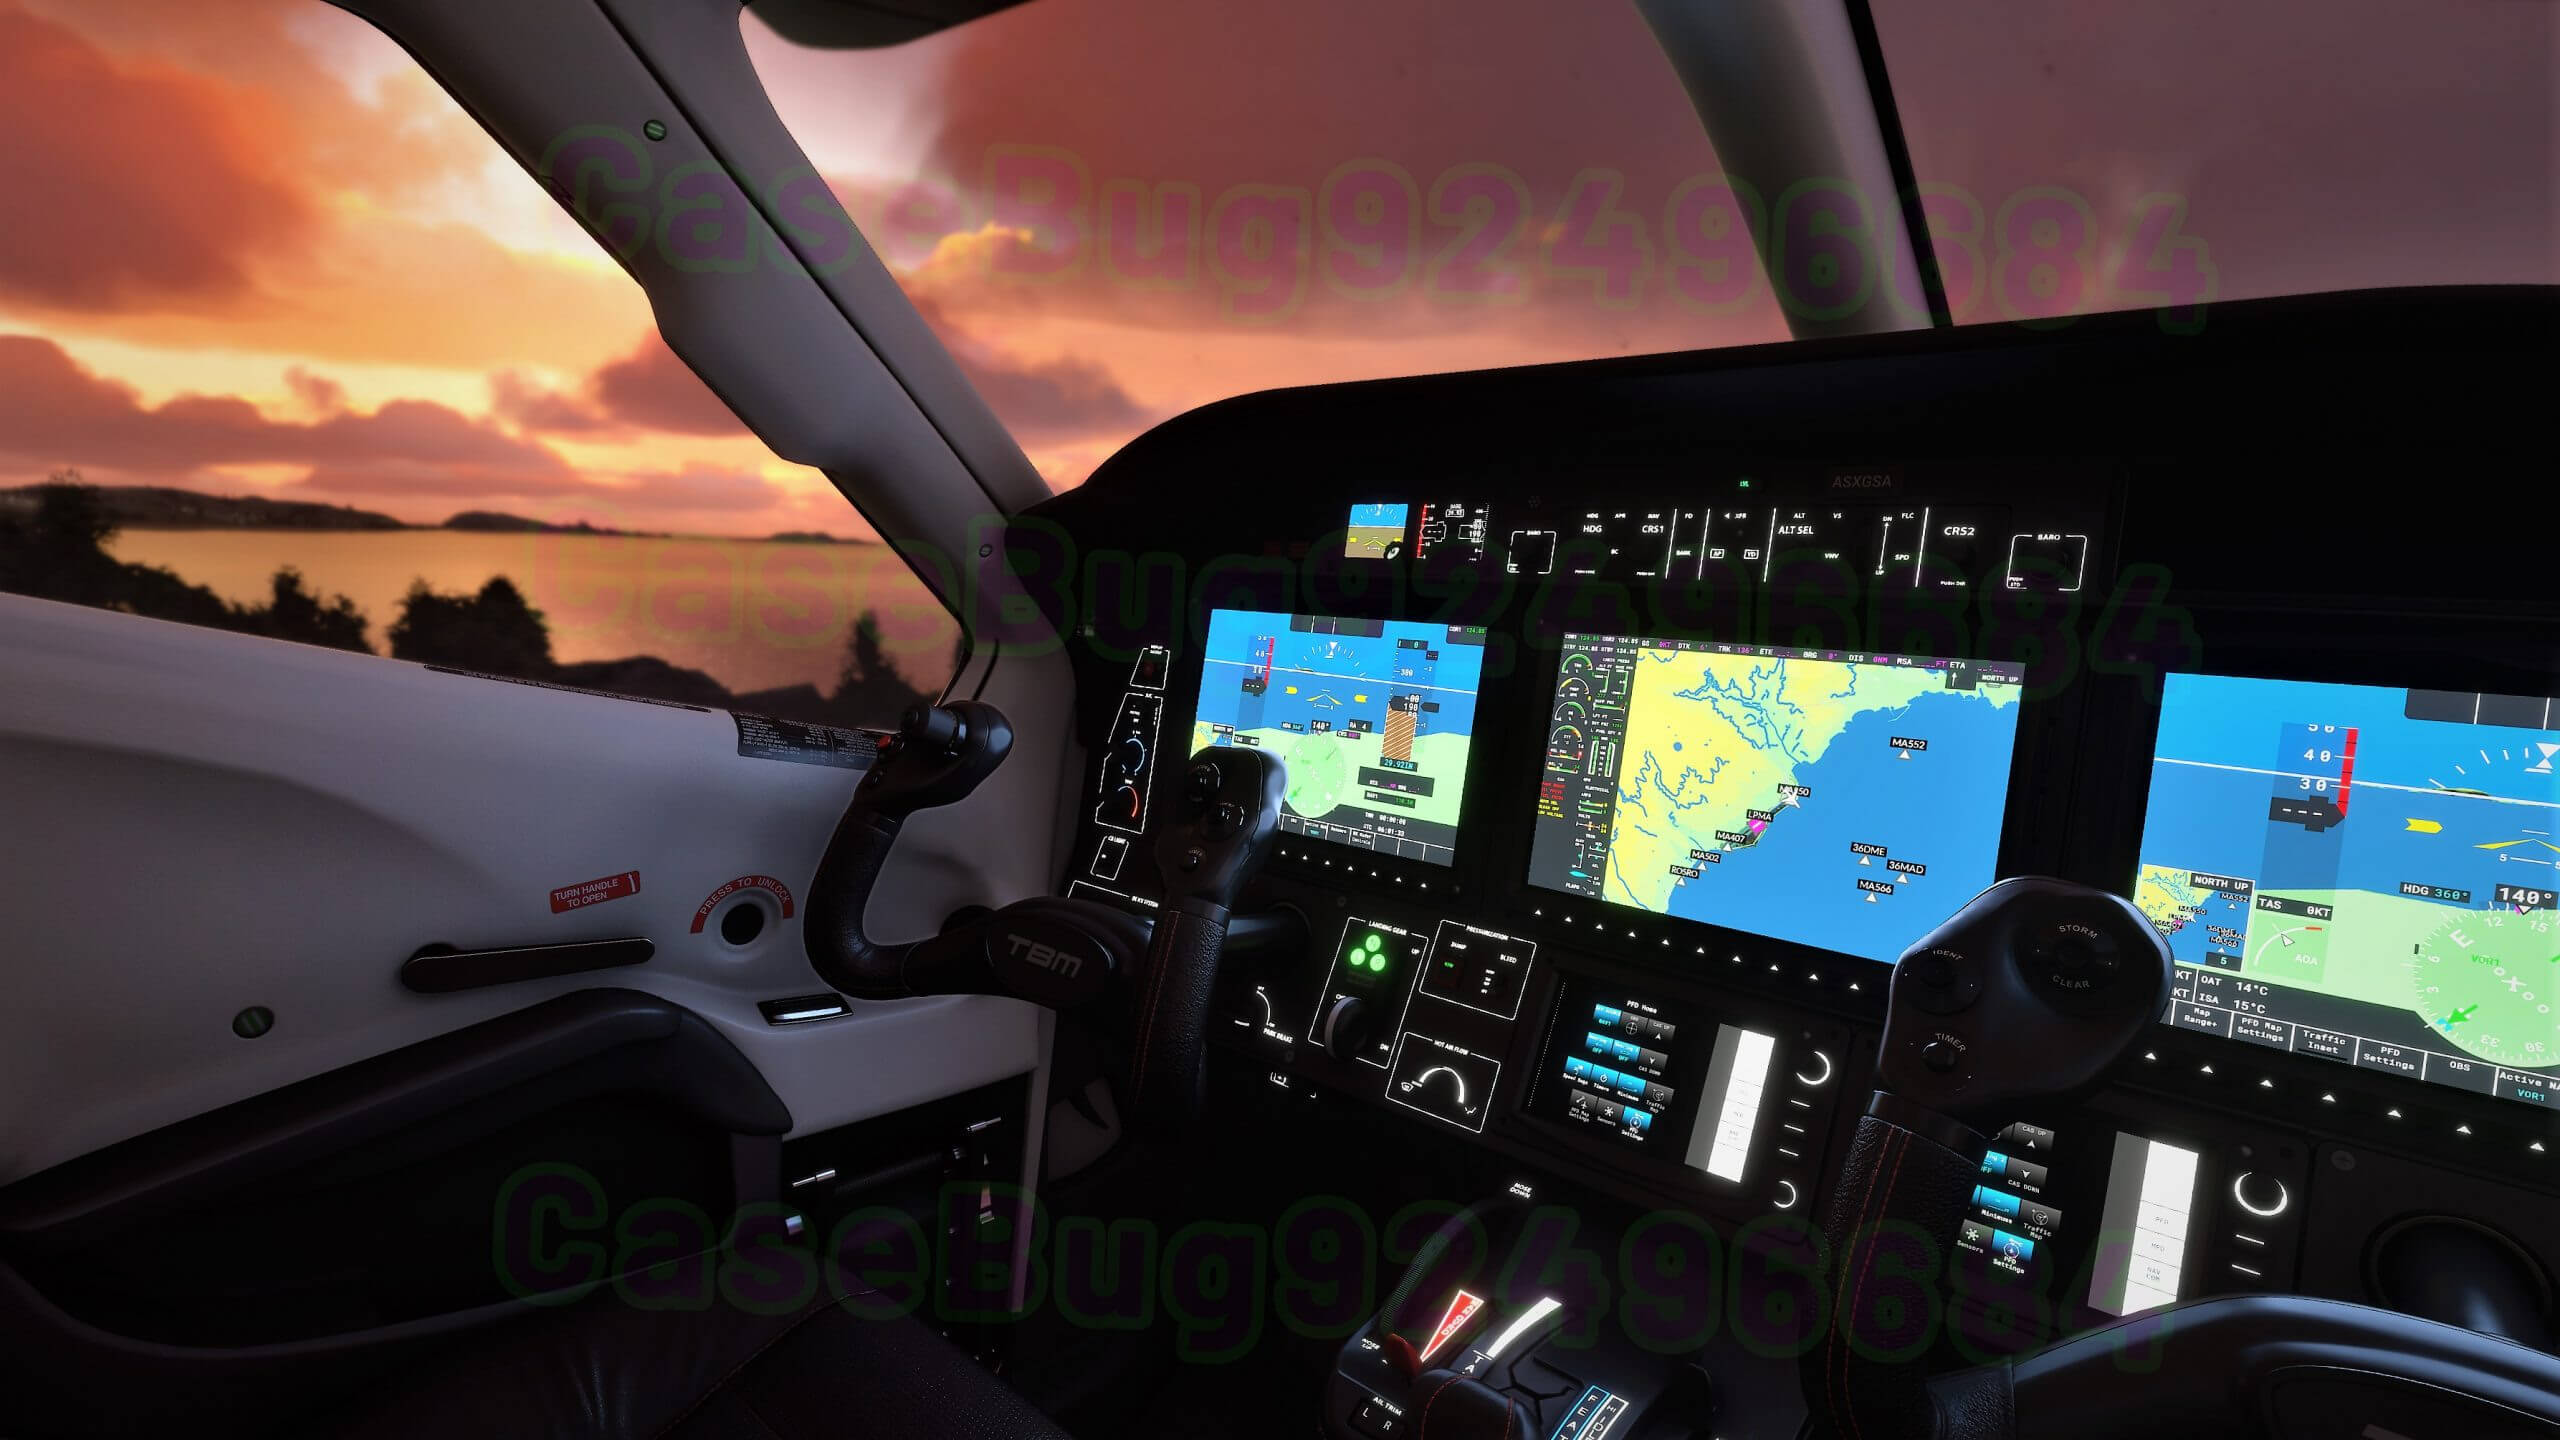 flight simulator pc game